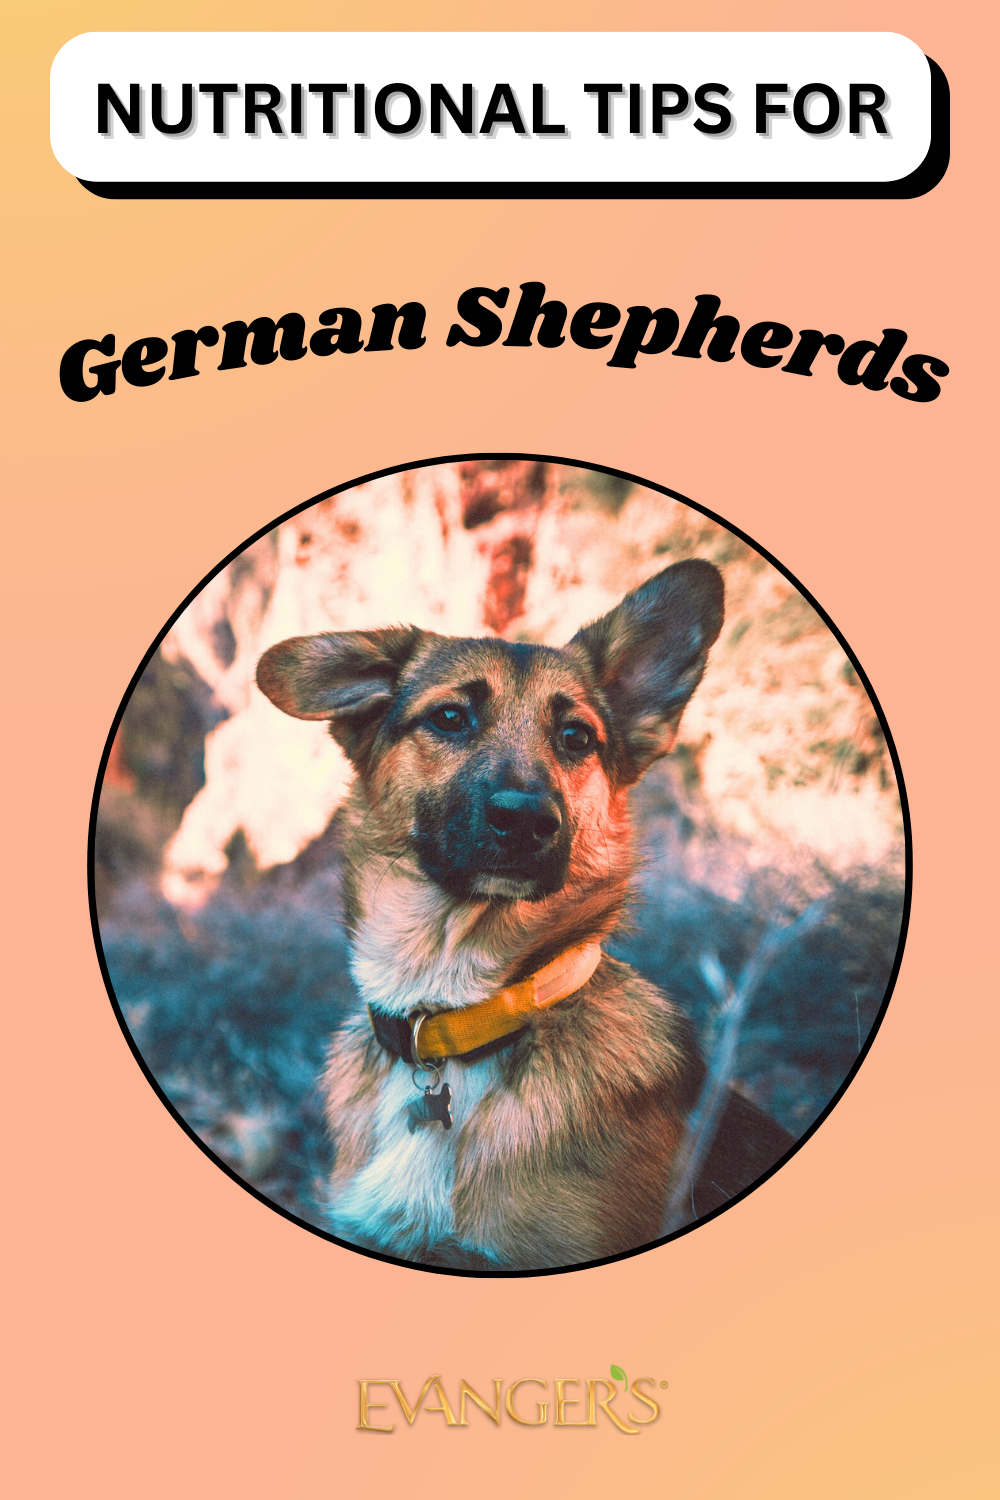 Nutritional Tips for German Shepherds